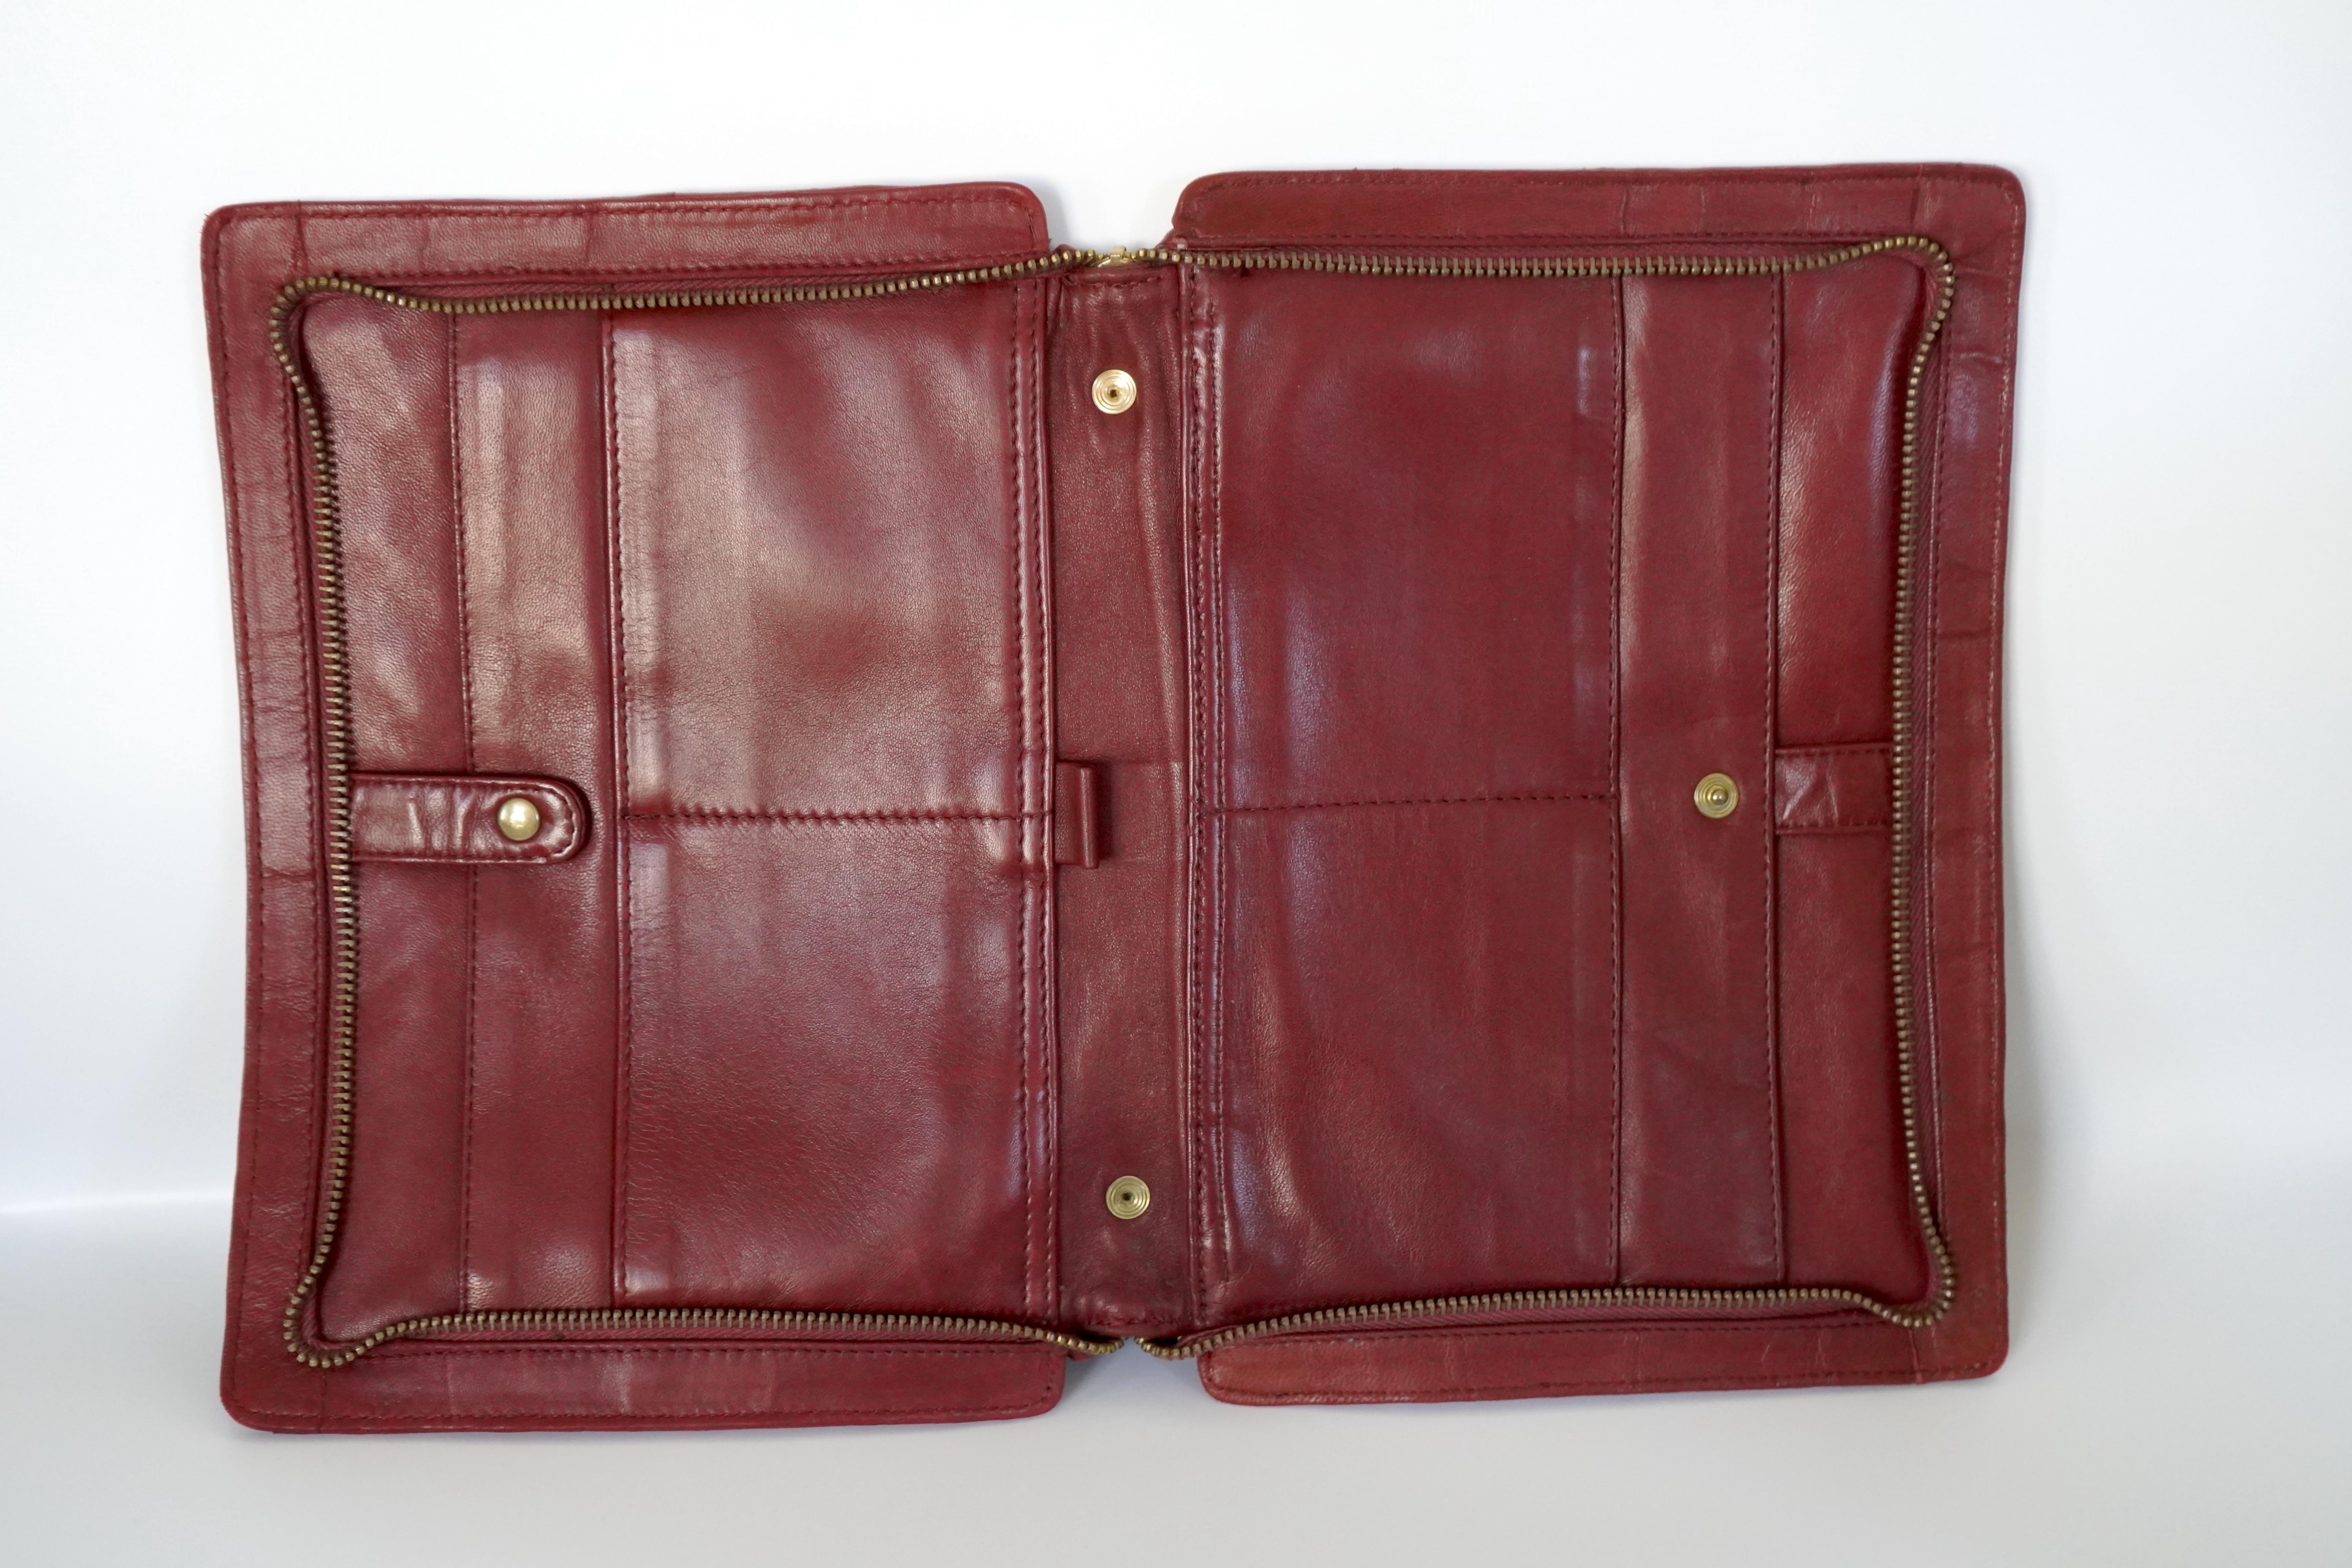 Bottega Veneta Intrecciato Red Clutch Bag In Fair Condition For Sale In Beverly Hills, CA